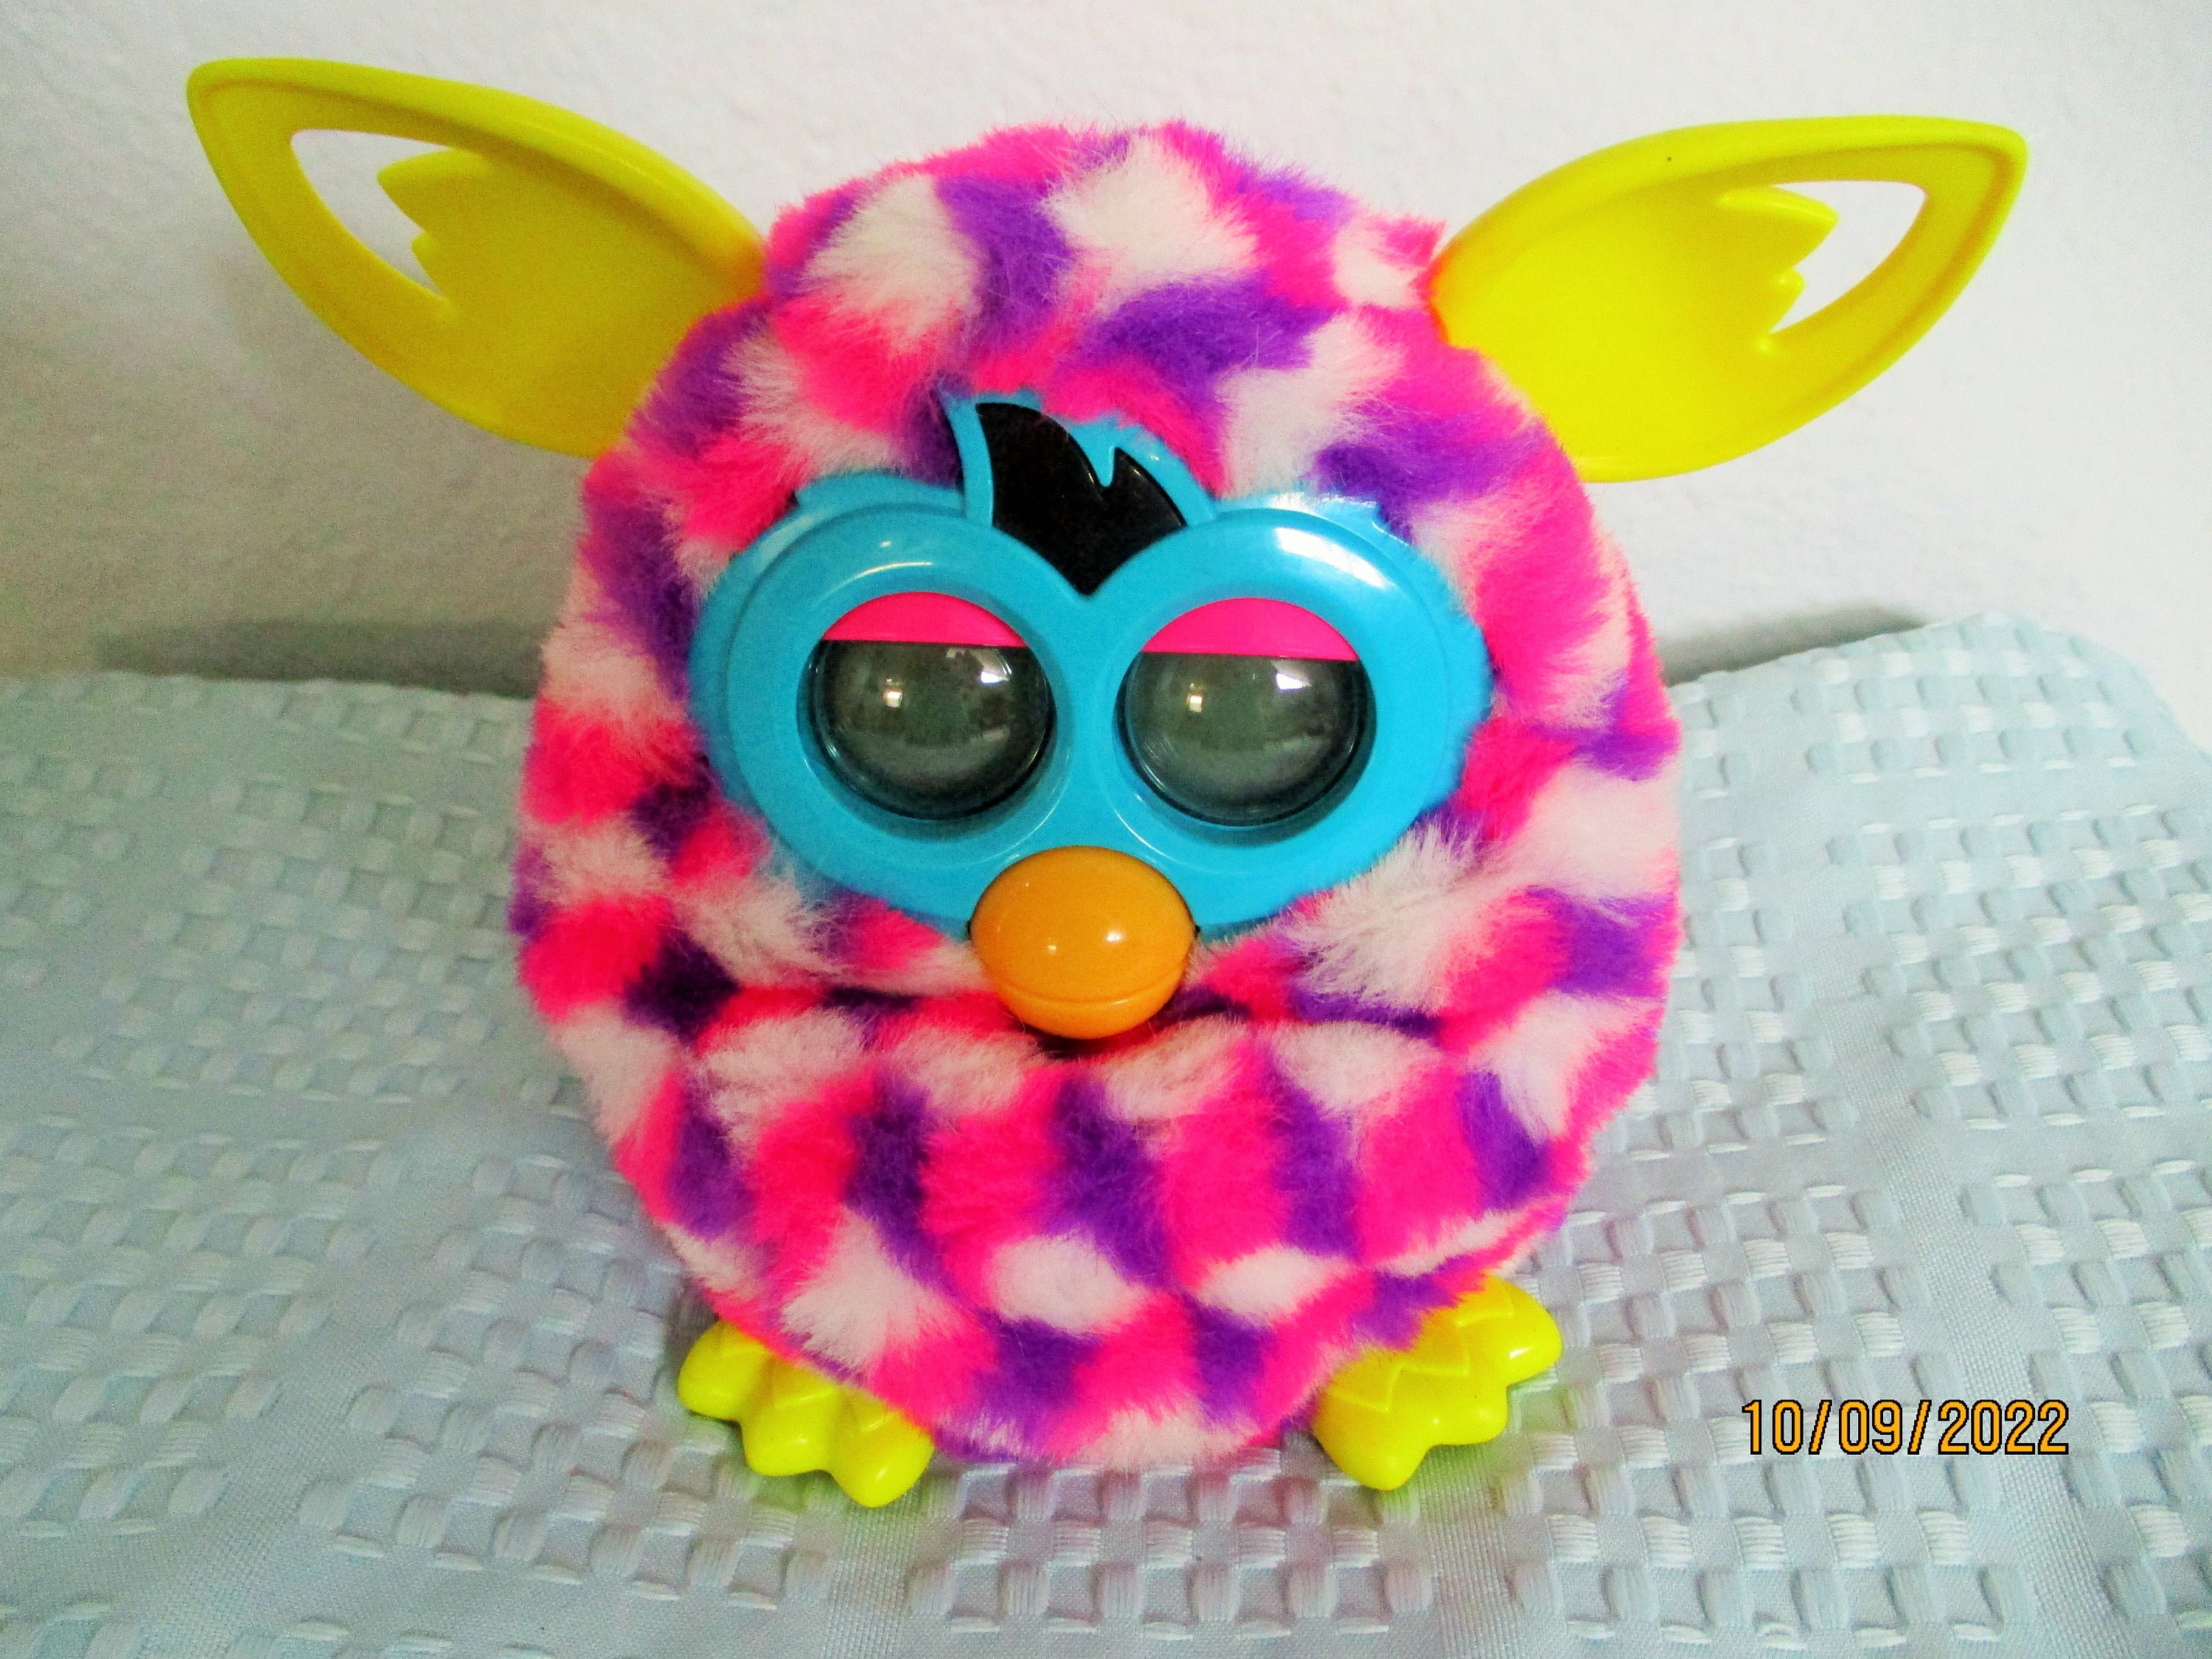 Furby 2012 Pink Puff –